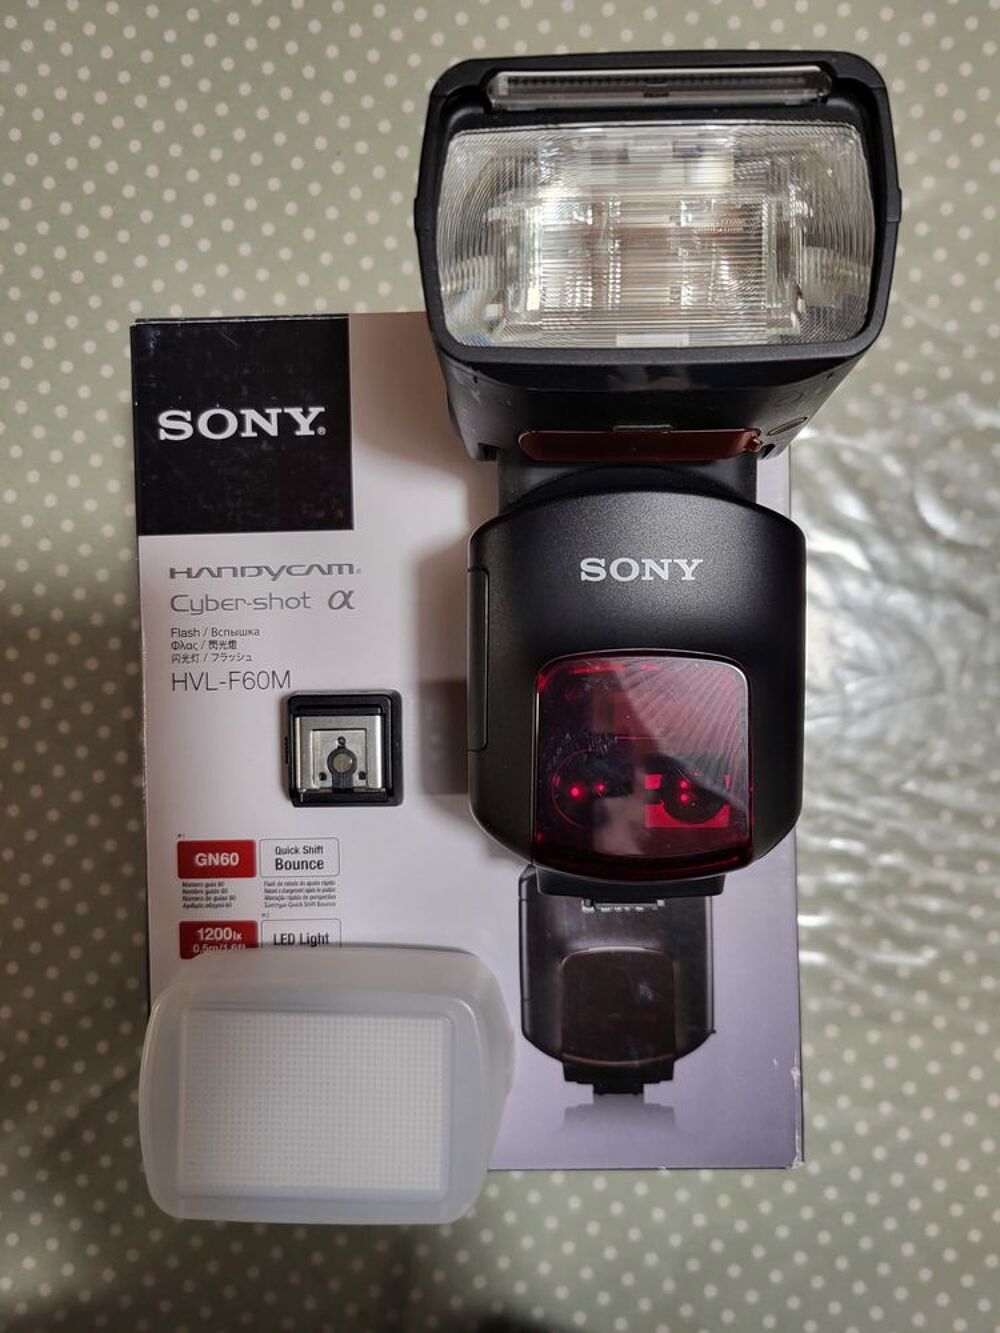 Sony Flash HVL-F60M Photos/Video/TV